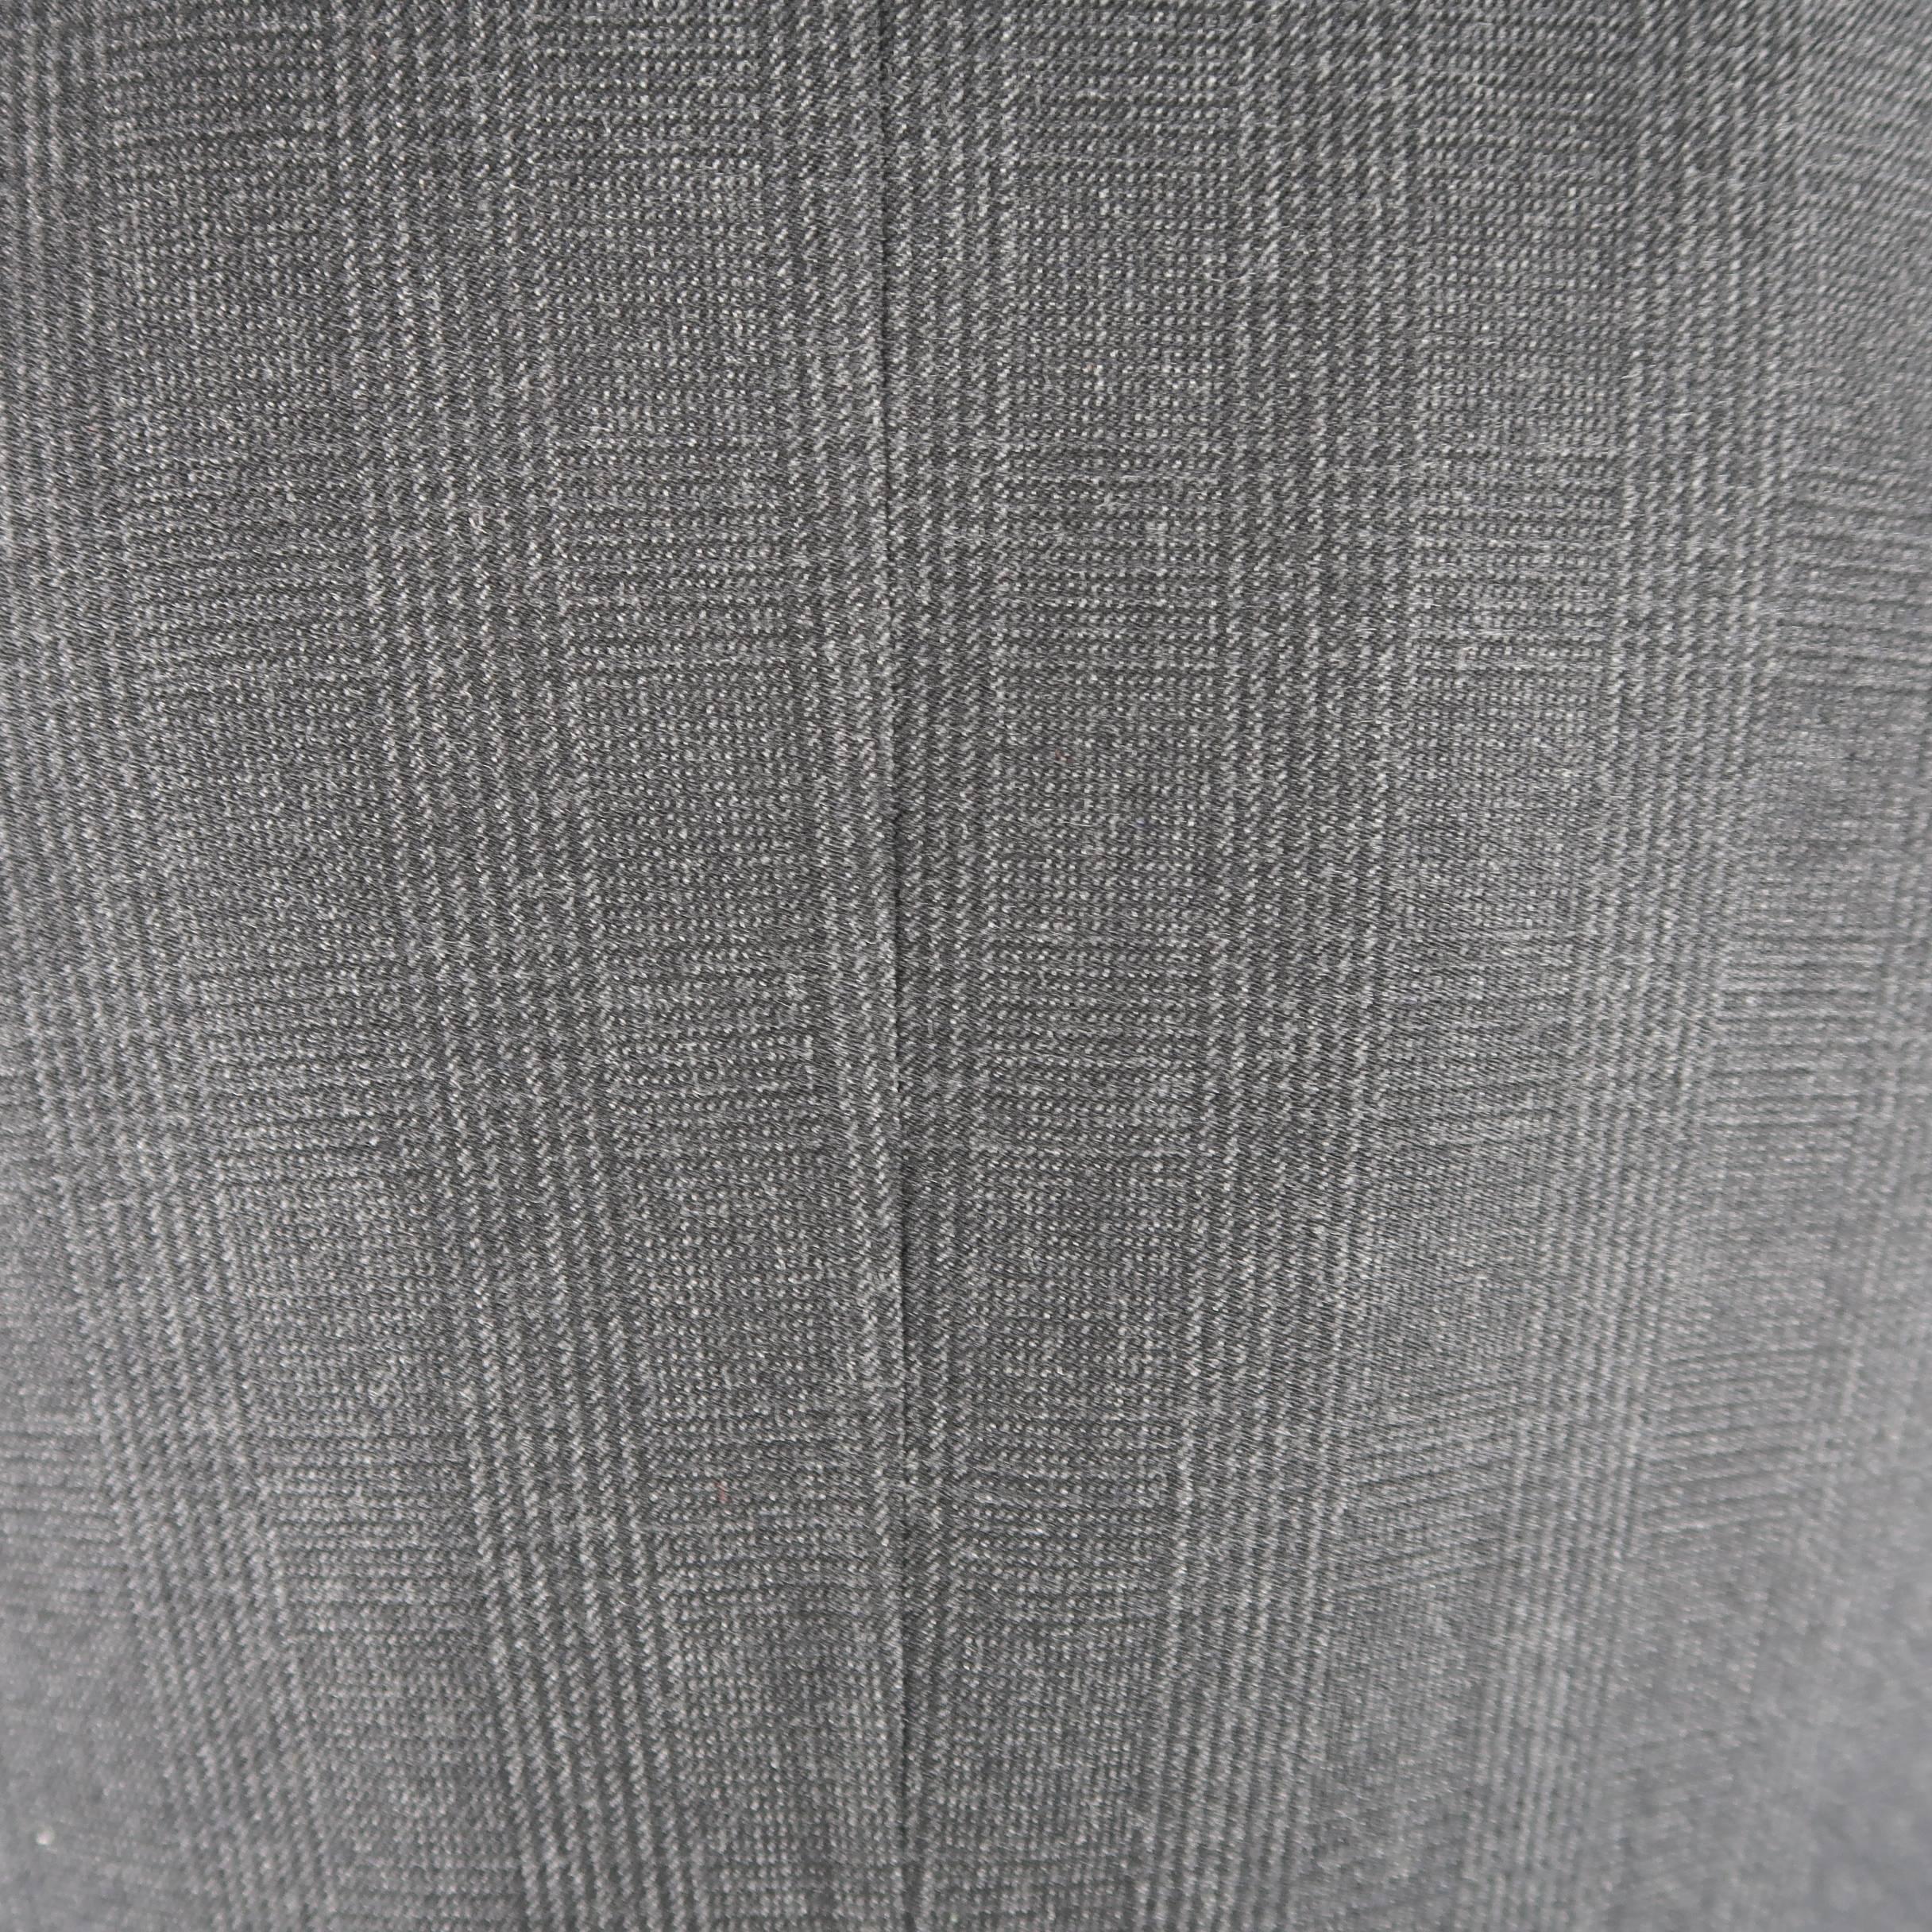 Men's PRADA 46 Charcoal Glenplaid Wool Notch Lapel overcoat Coat Jacket